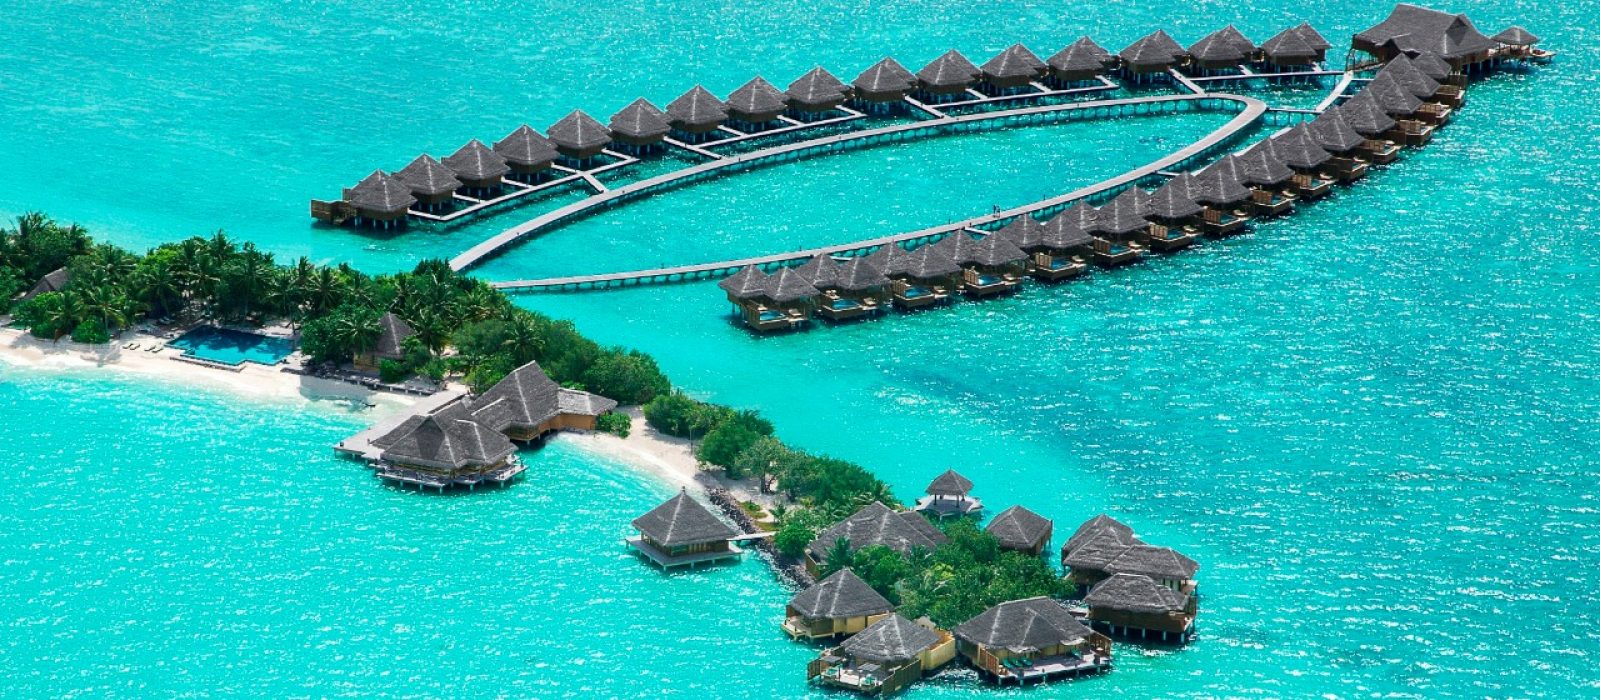  &nbsp;  &nbsp;   Maldives   Find paradise in the Indian Ocean  &nbsp;  &nbsp;  &nbsp; 